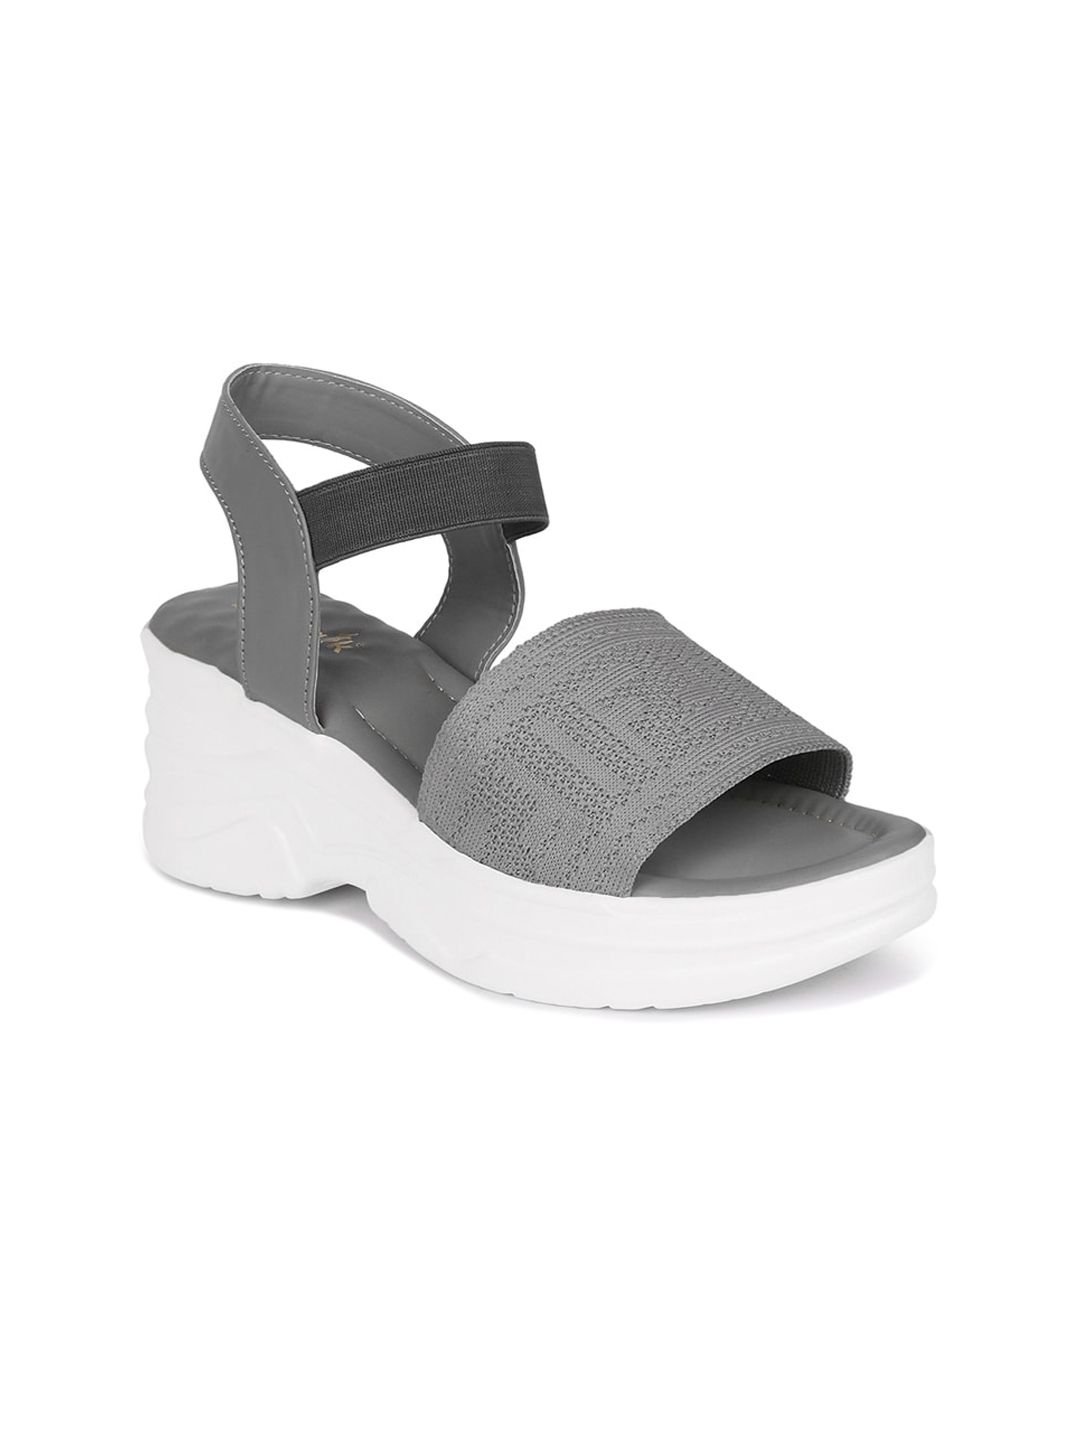 Longwalk Women Grey Platform Sandals Price in India